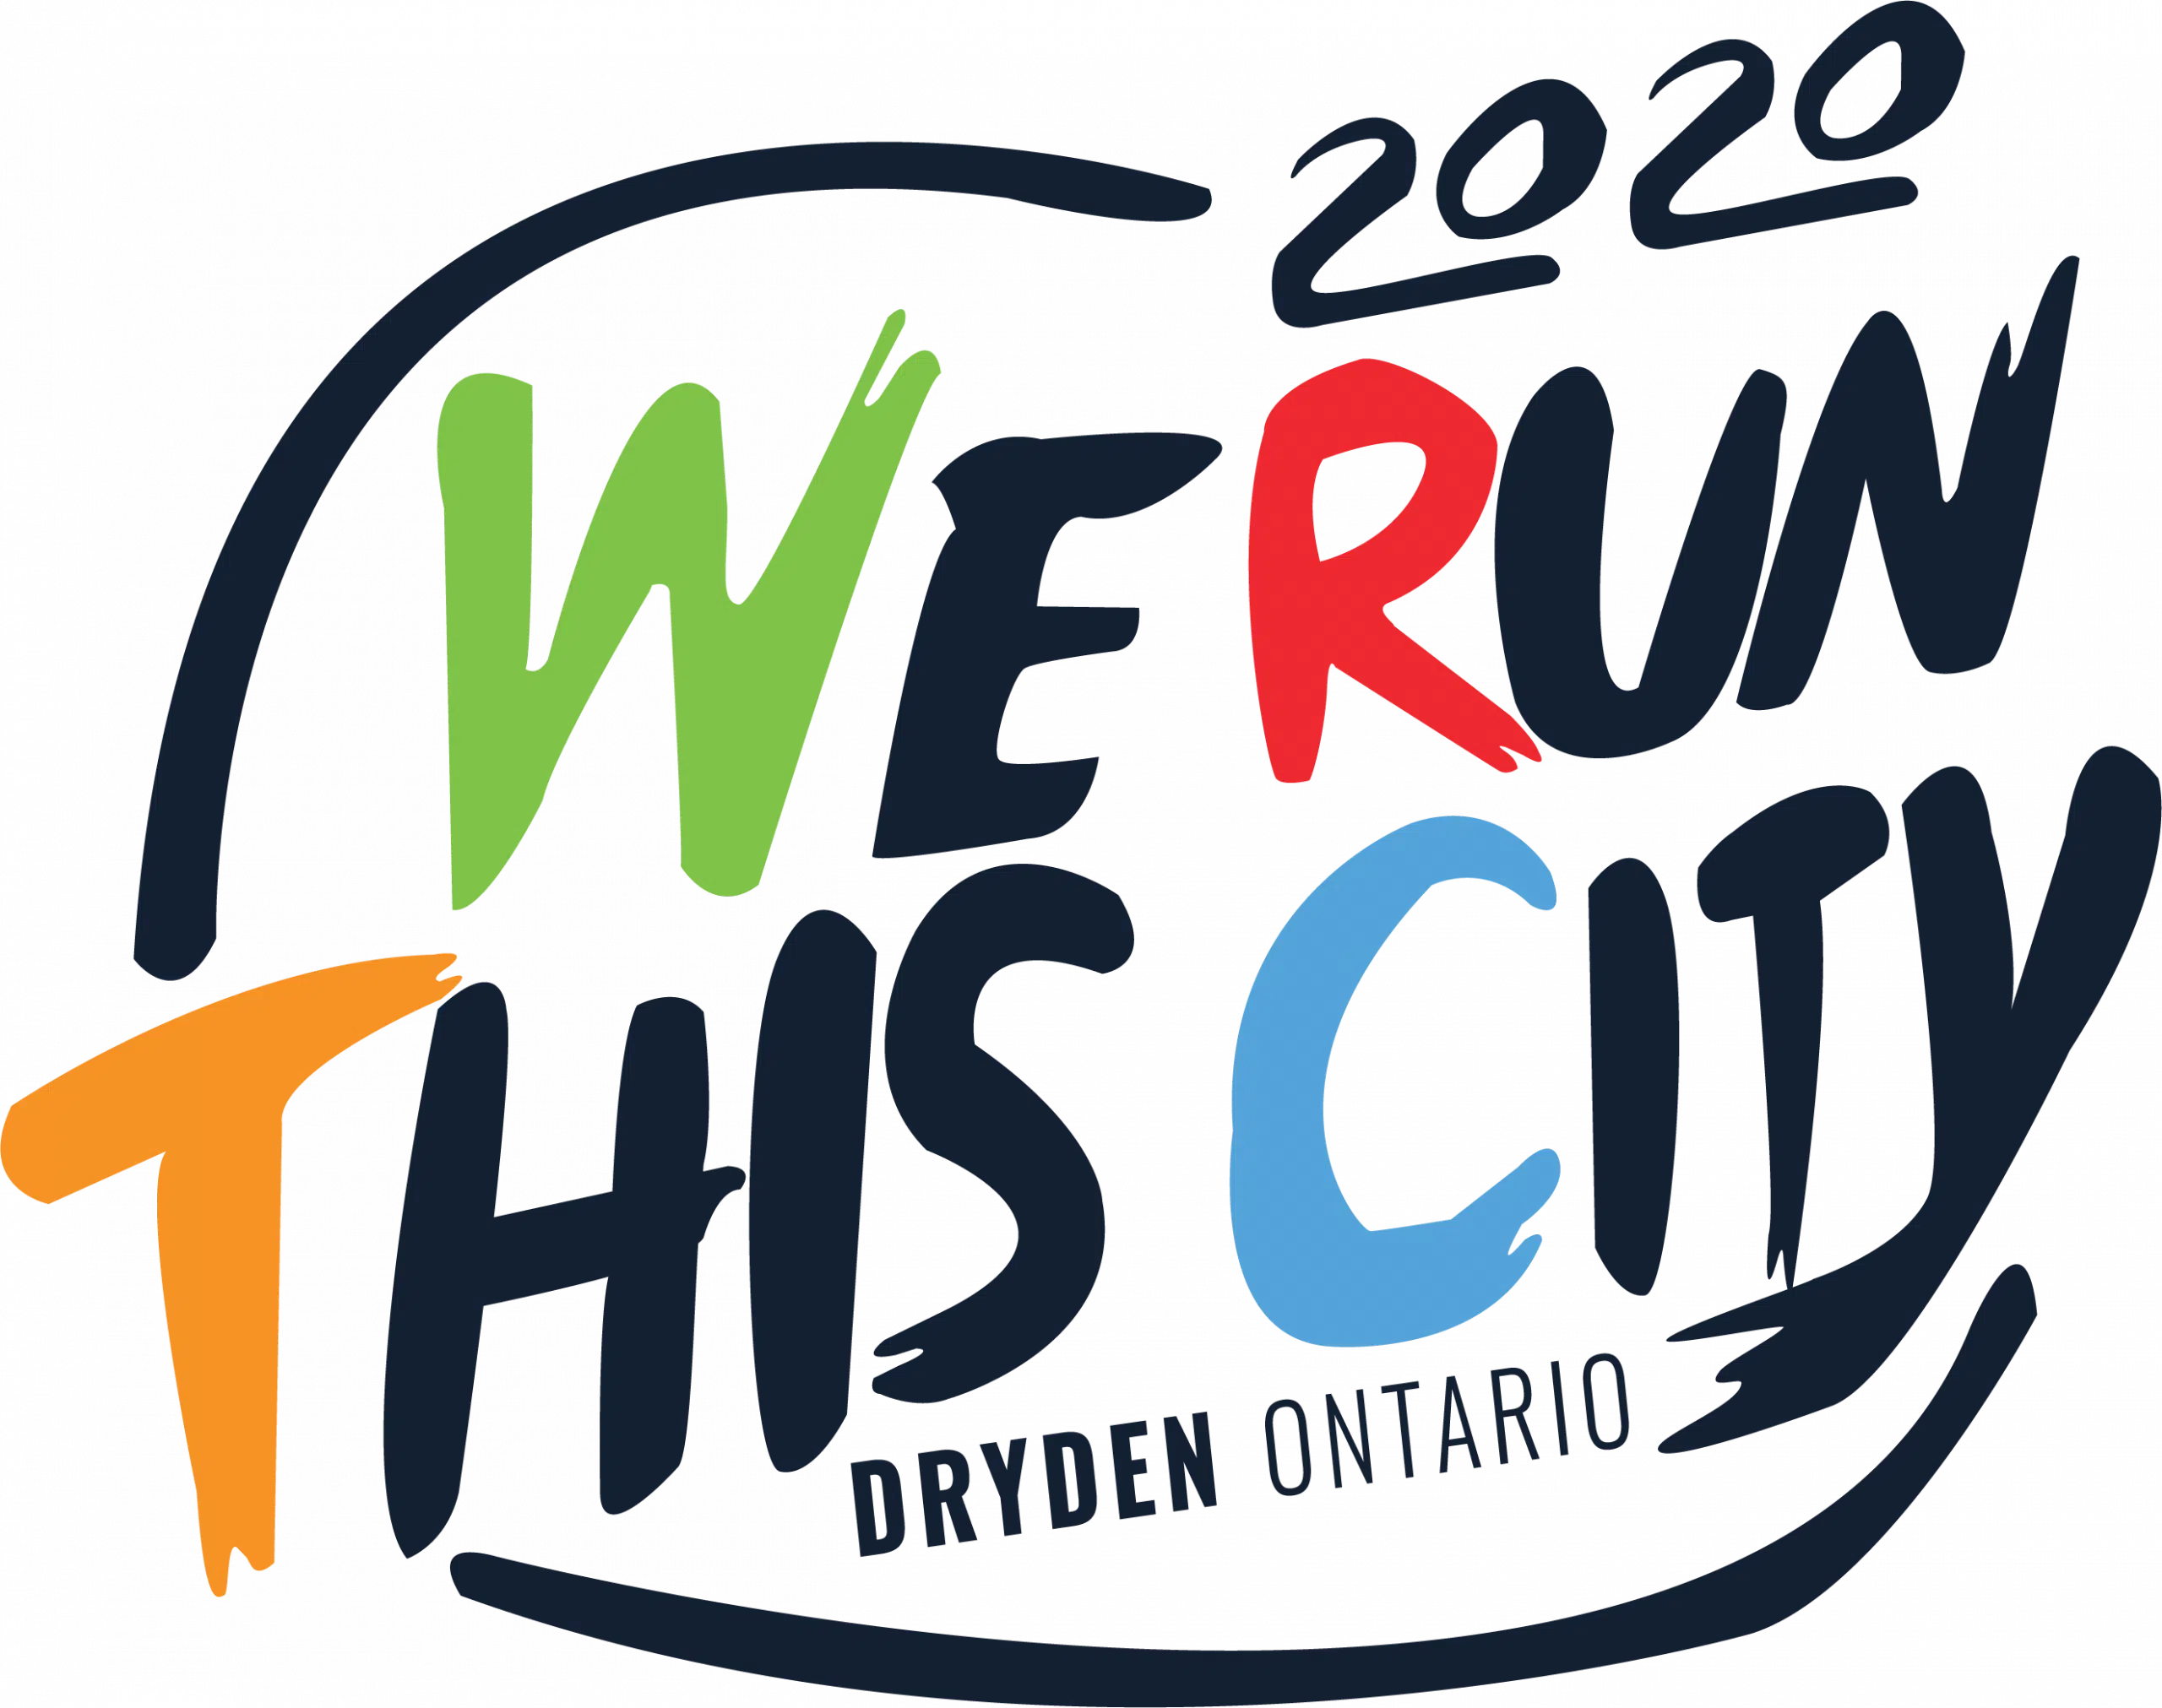 We Run This City 2020 Goes Digital